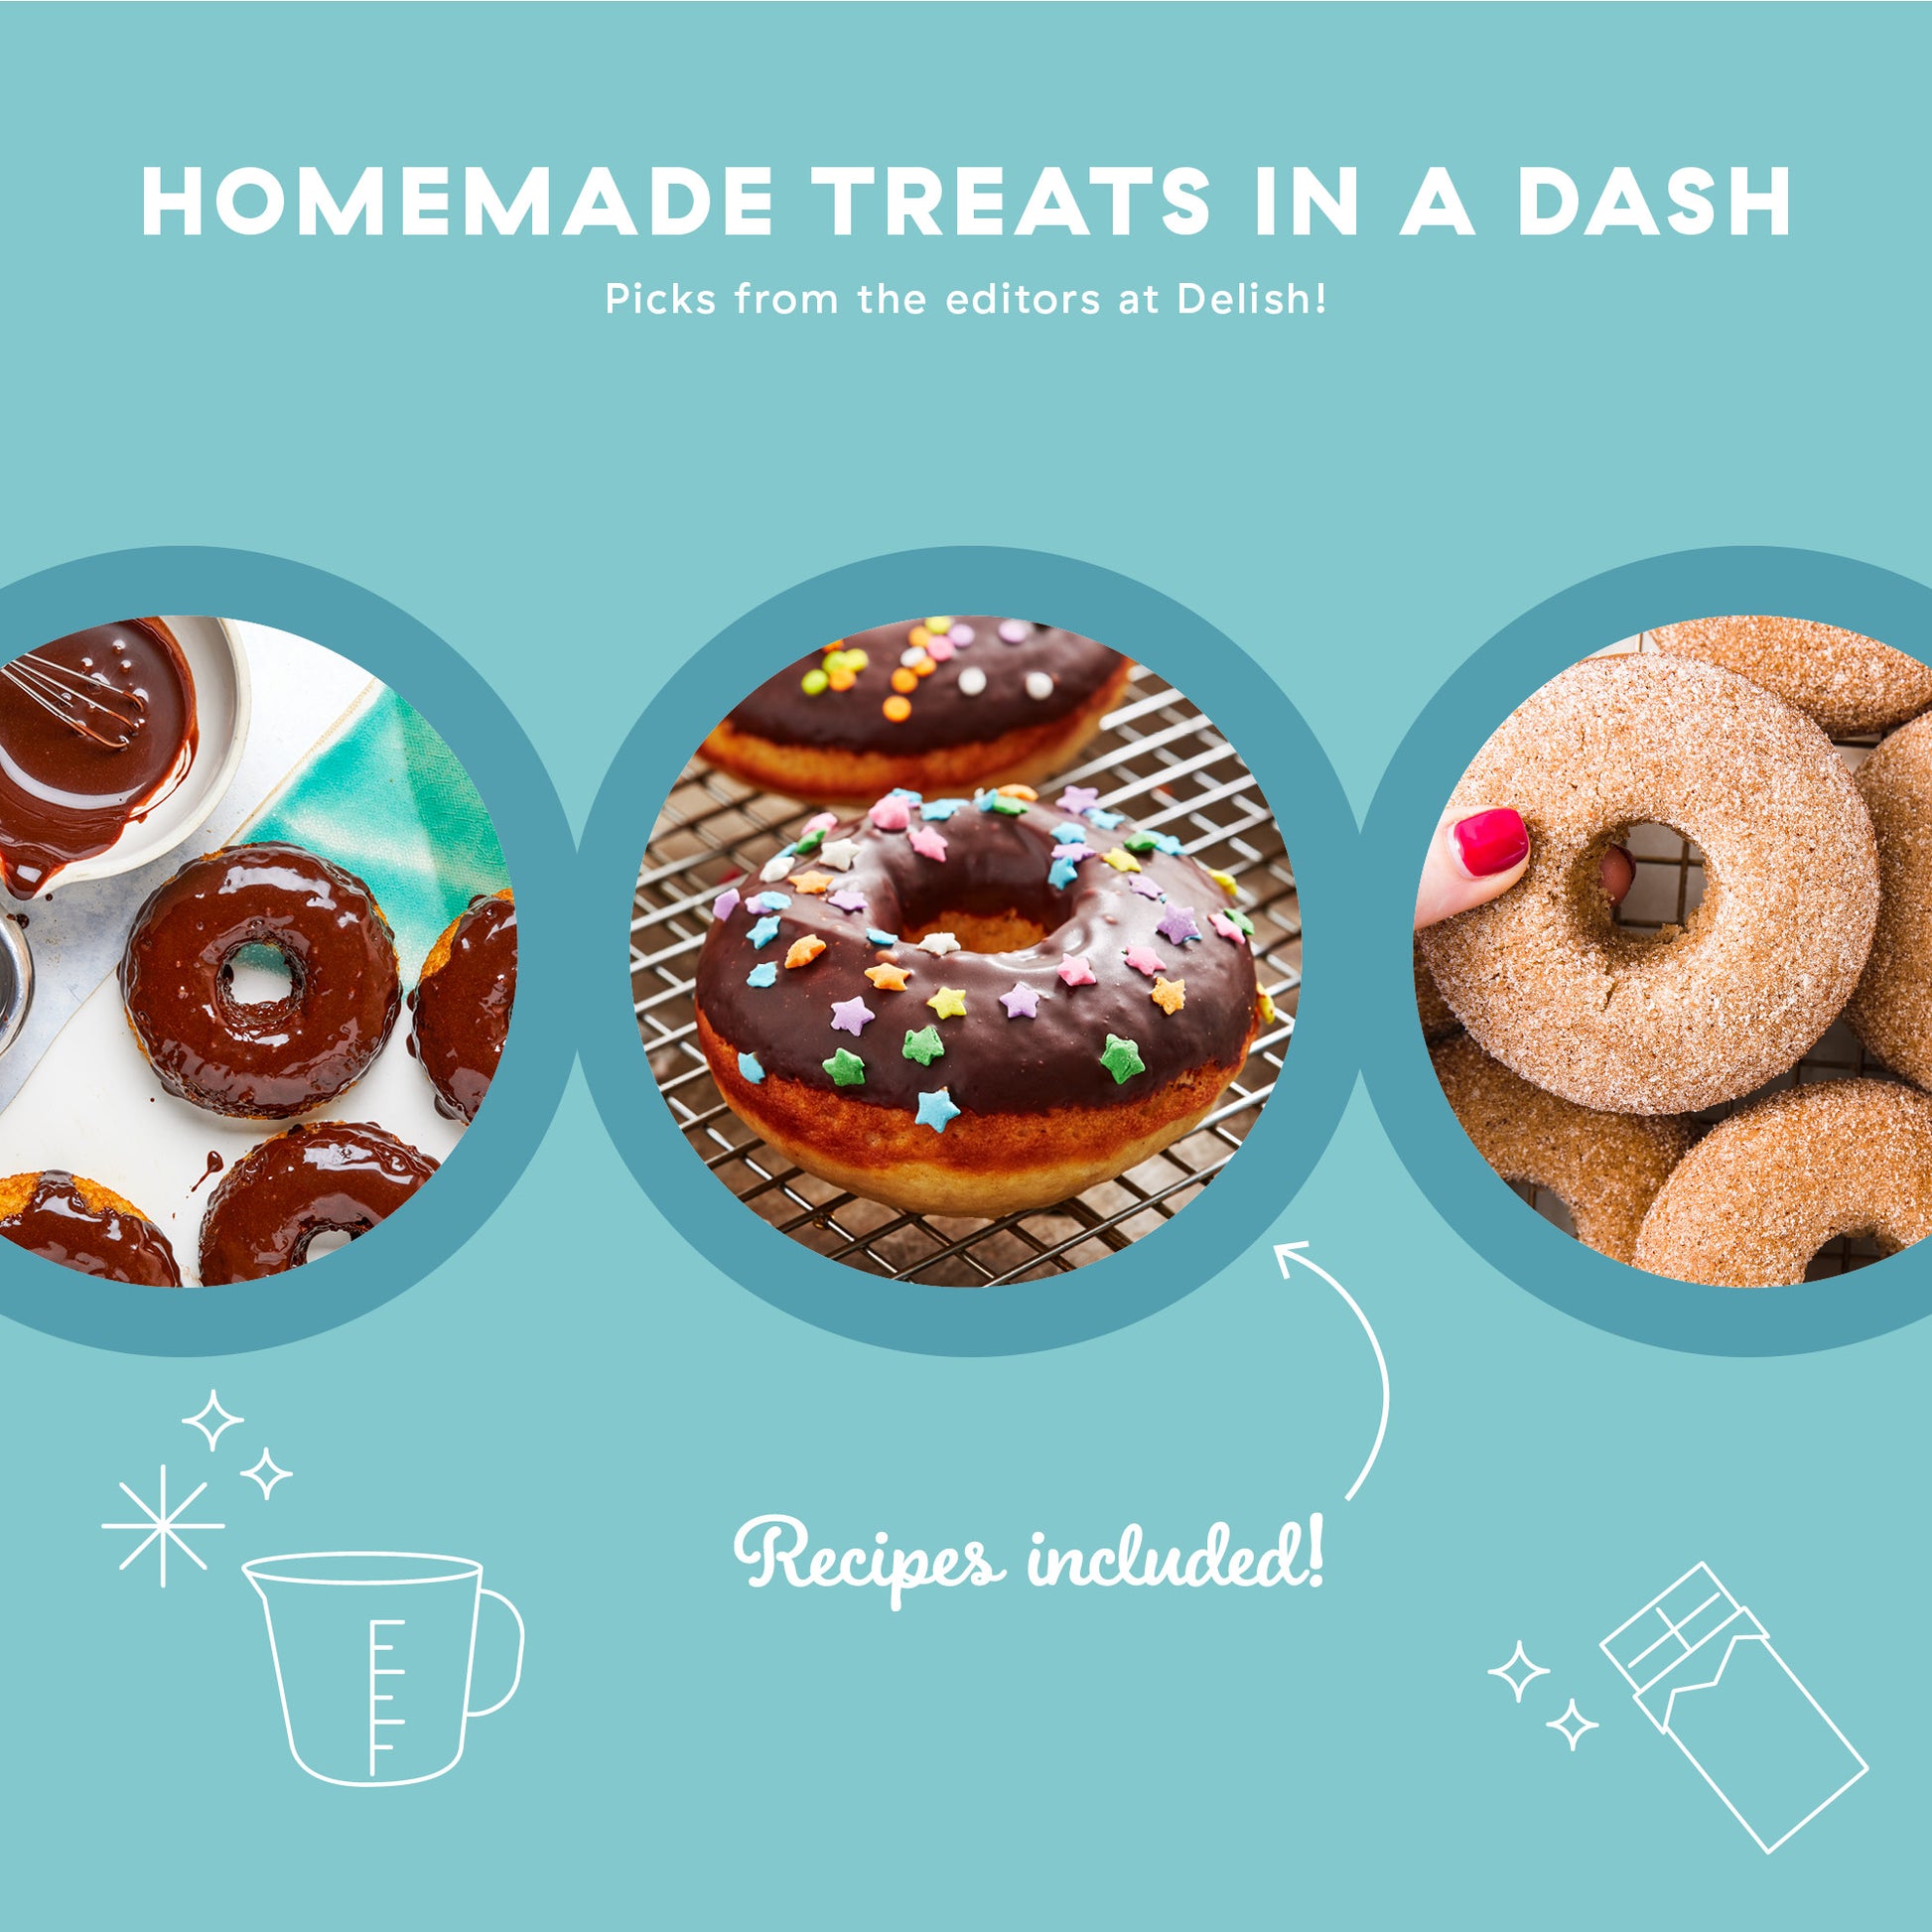 Personal Donut Maker  Donut maker, Homemade donuts, Dash recipe